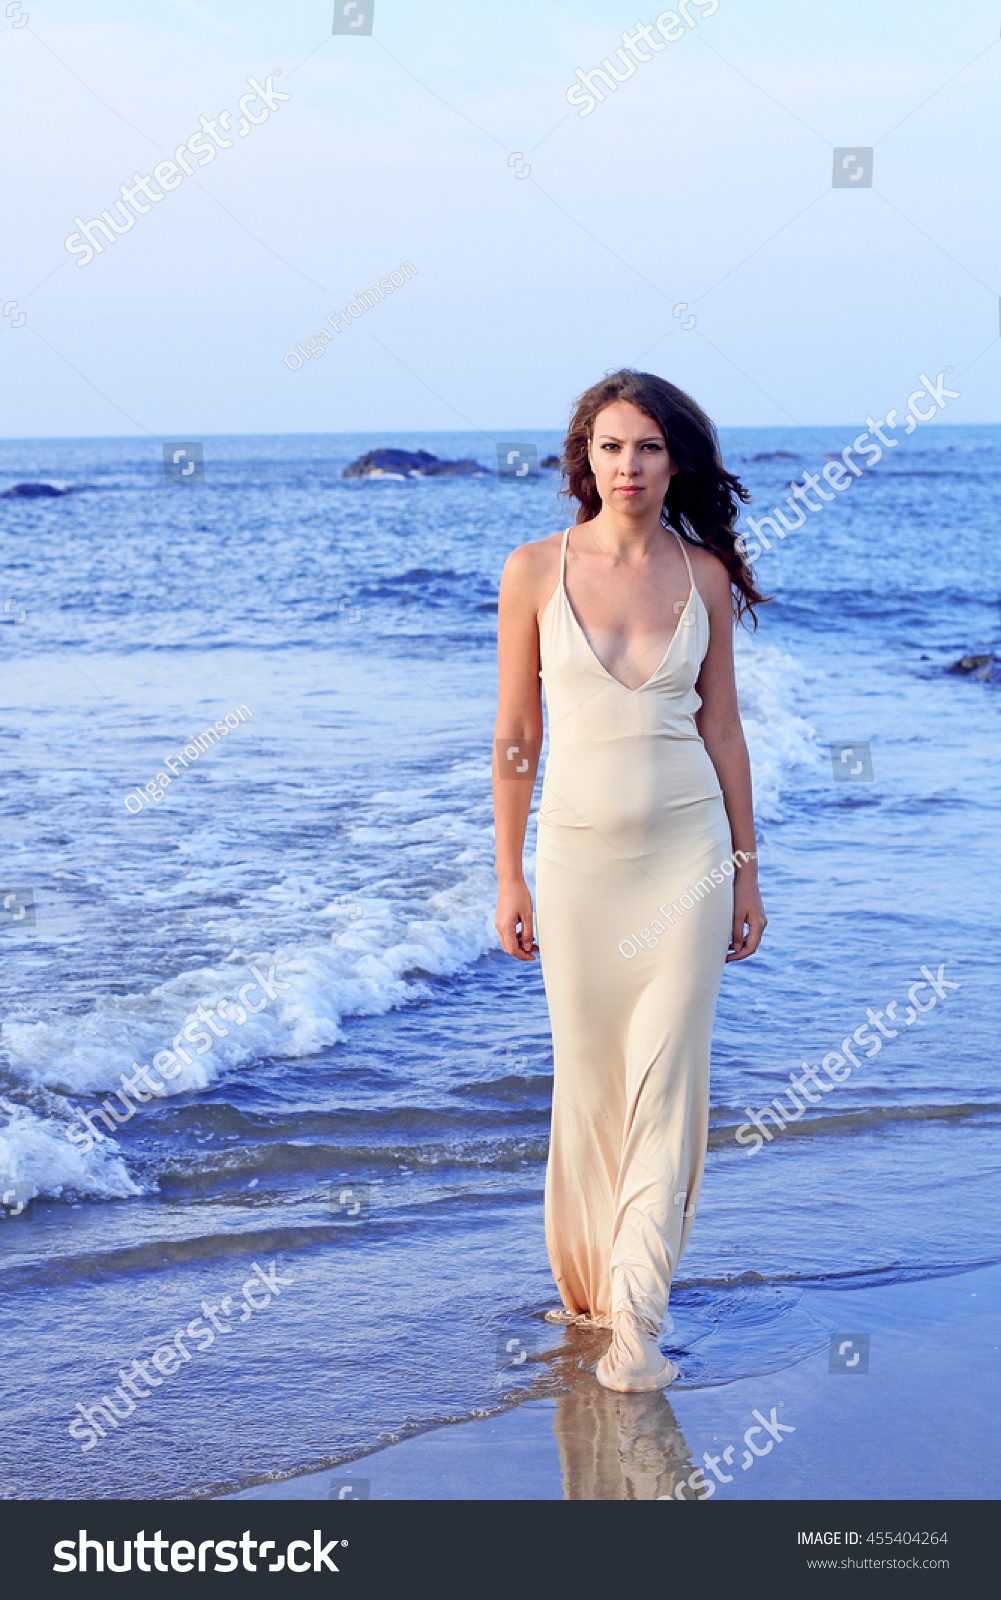 andee mckenzie add photo women walking on beach